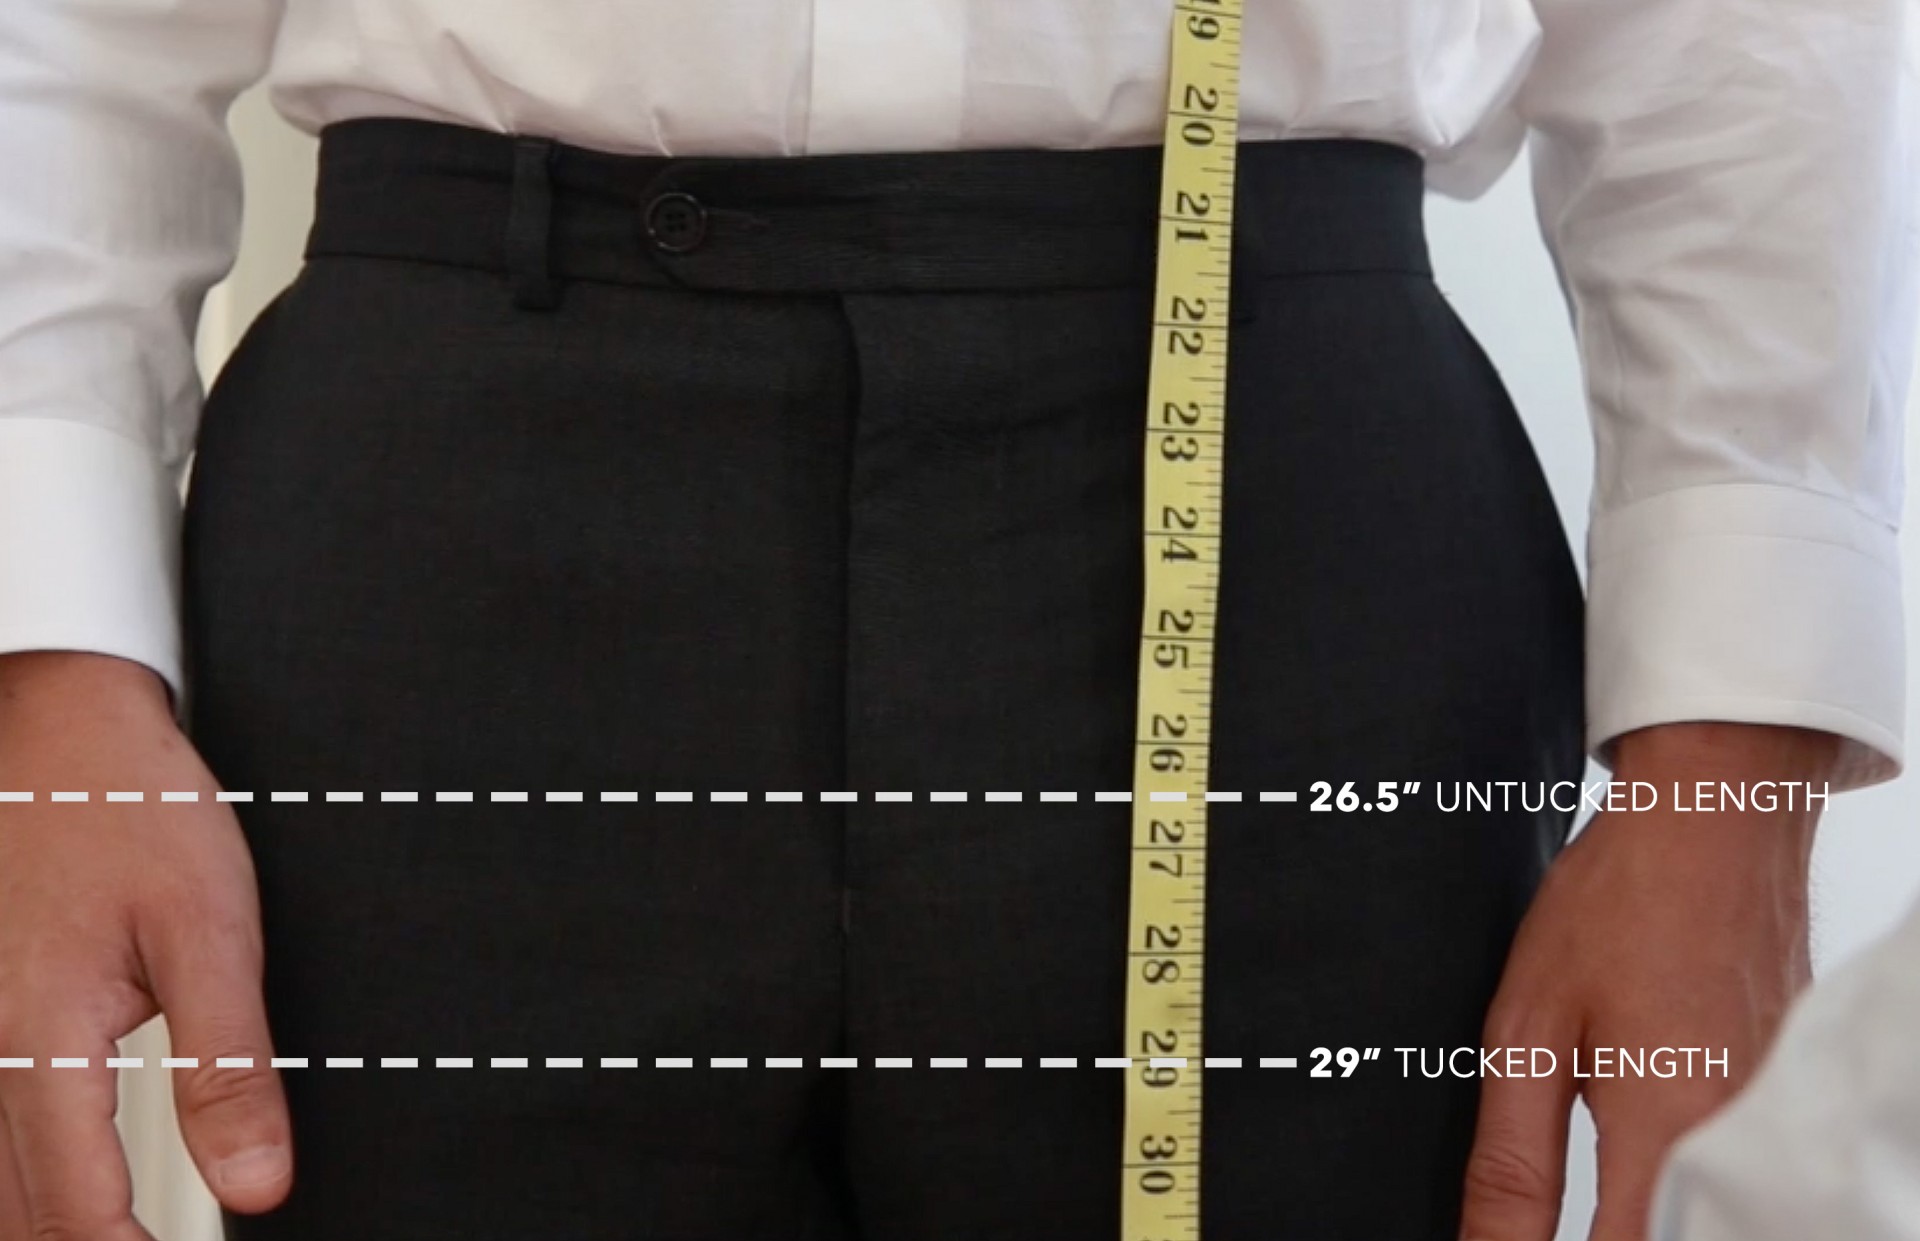 A Quaint Perspective: Correct Shirt Length